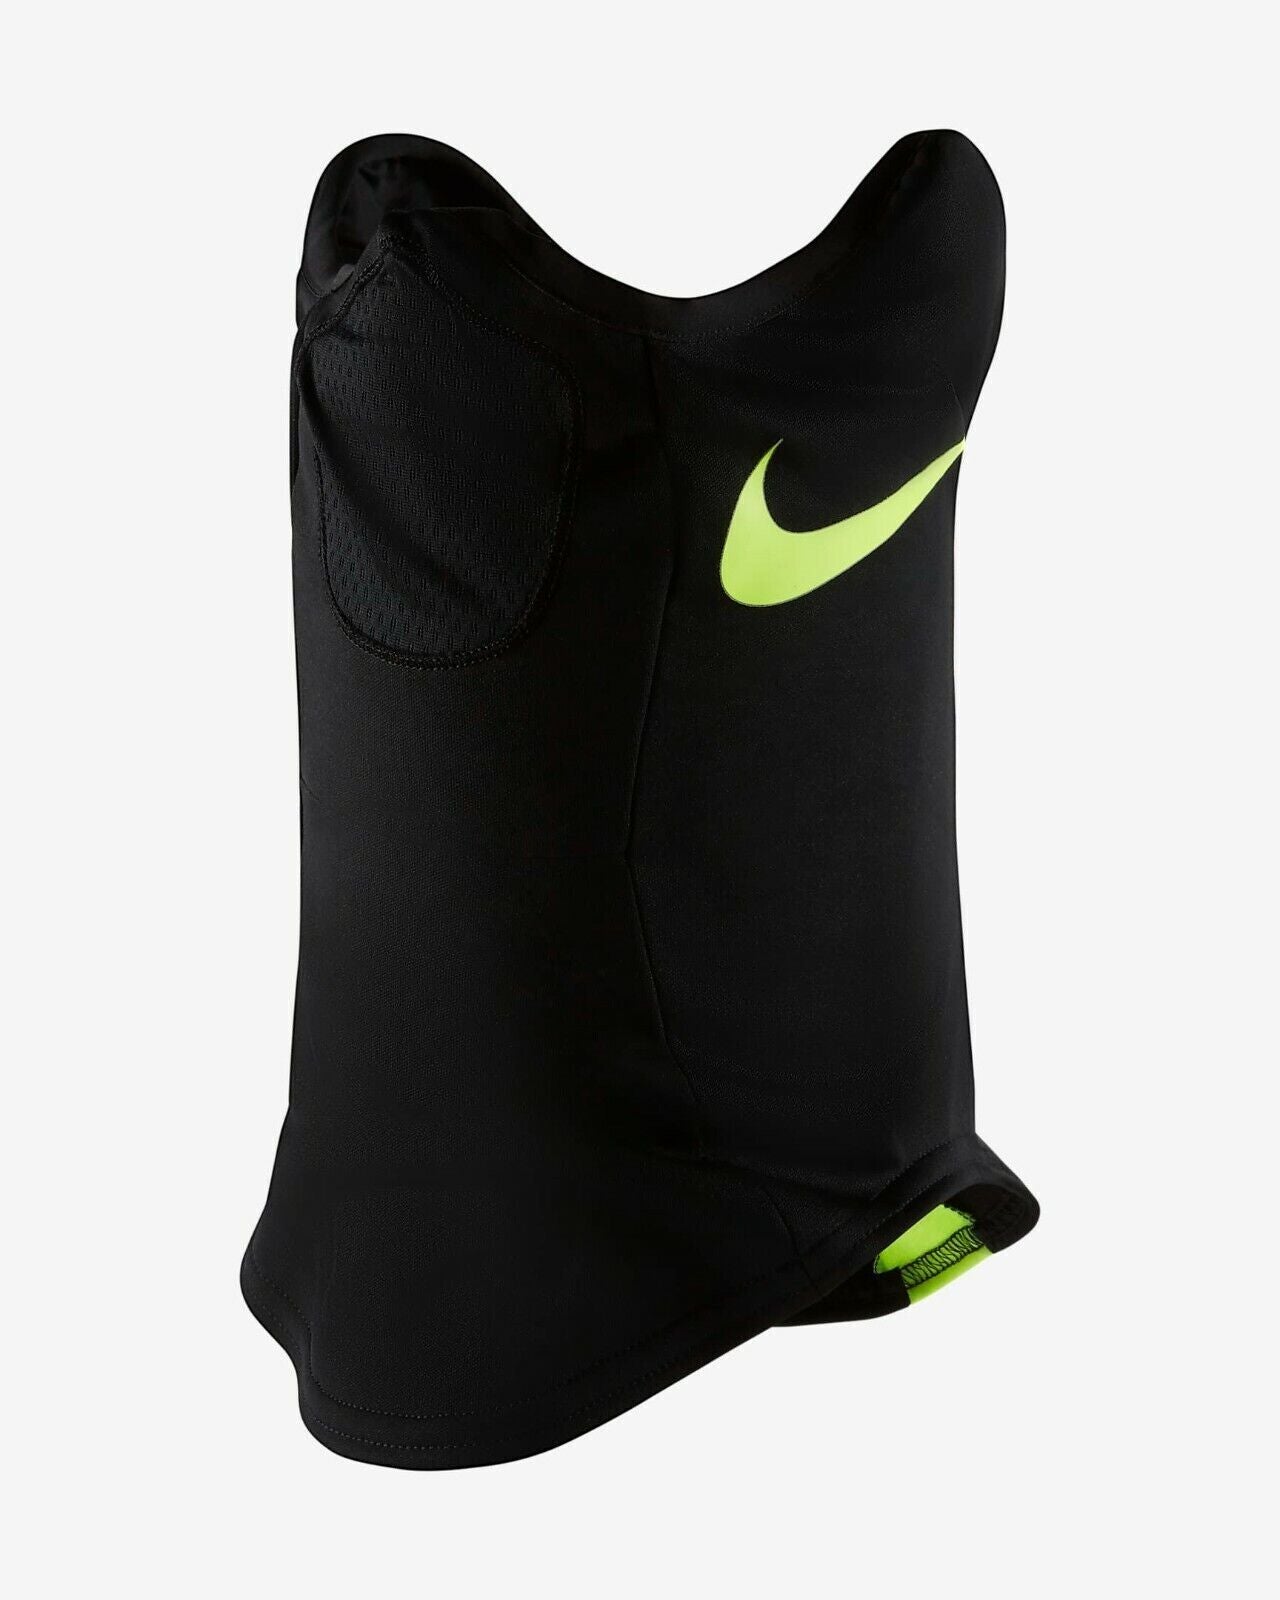 Nike Dri-Fit Snood Neck Warmer Mens Unisex Thermal Mask Football Scarf Sports